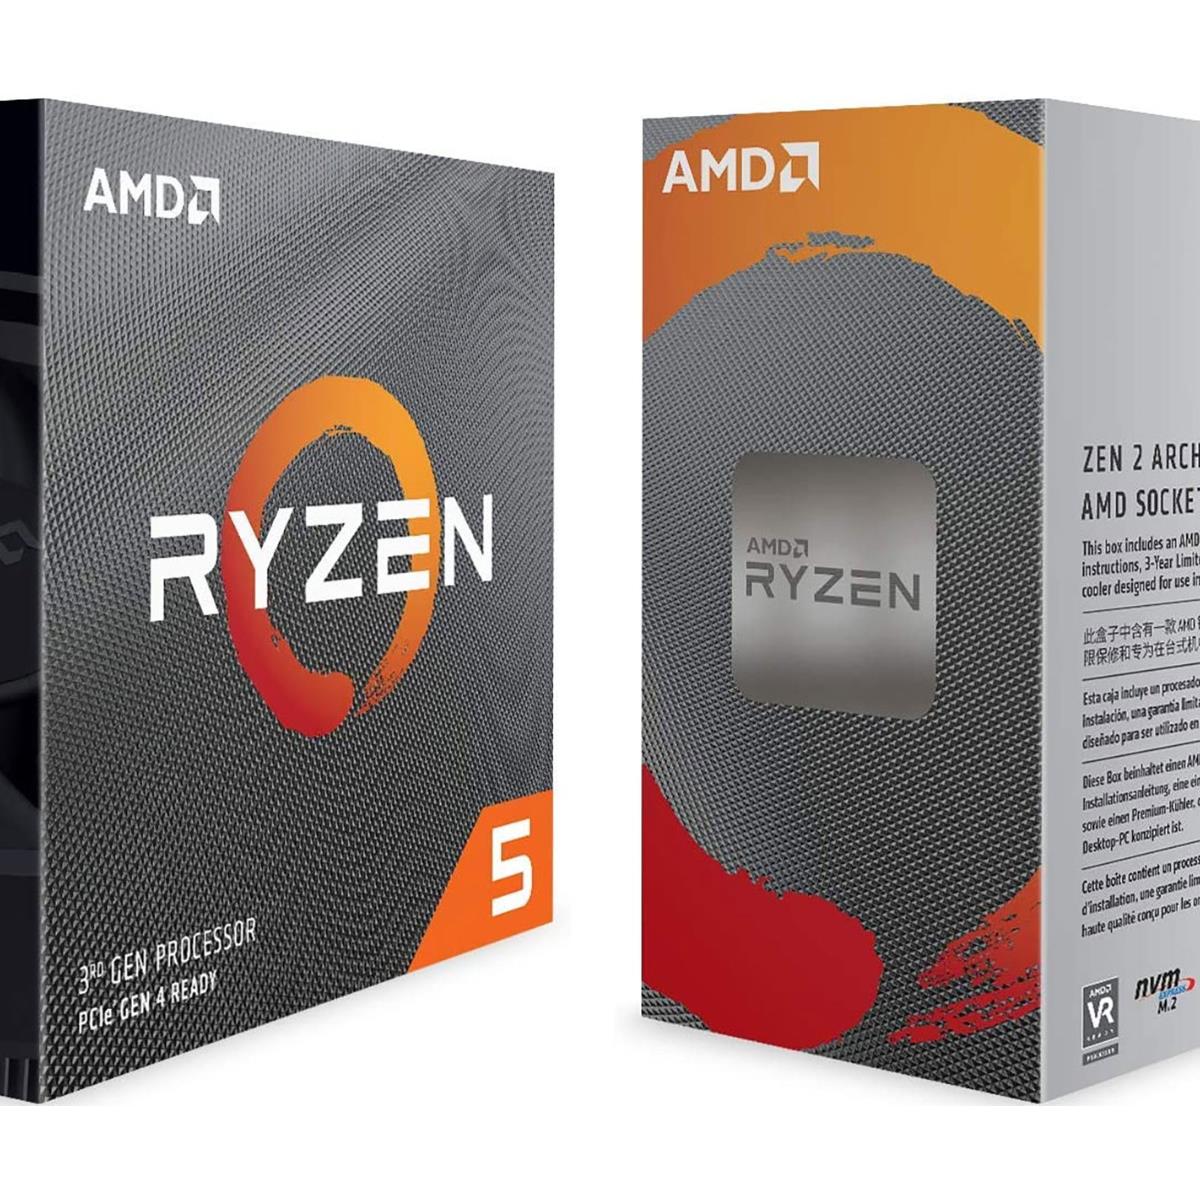 AMD's Ryzen 5 3600 Zen 2 CPU Is A Smoking Hot Tech Bargain Now At 